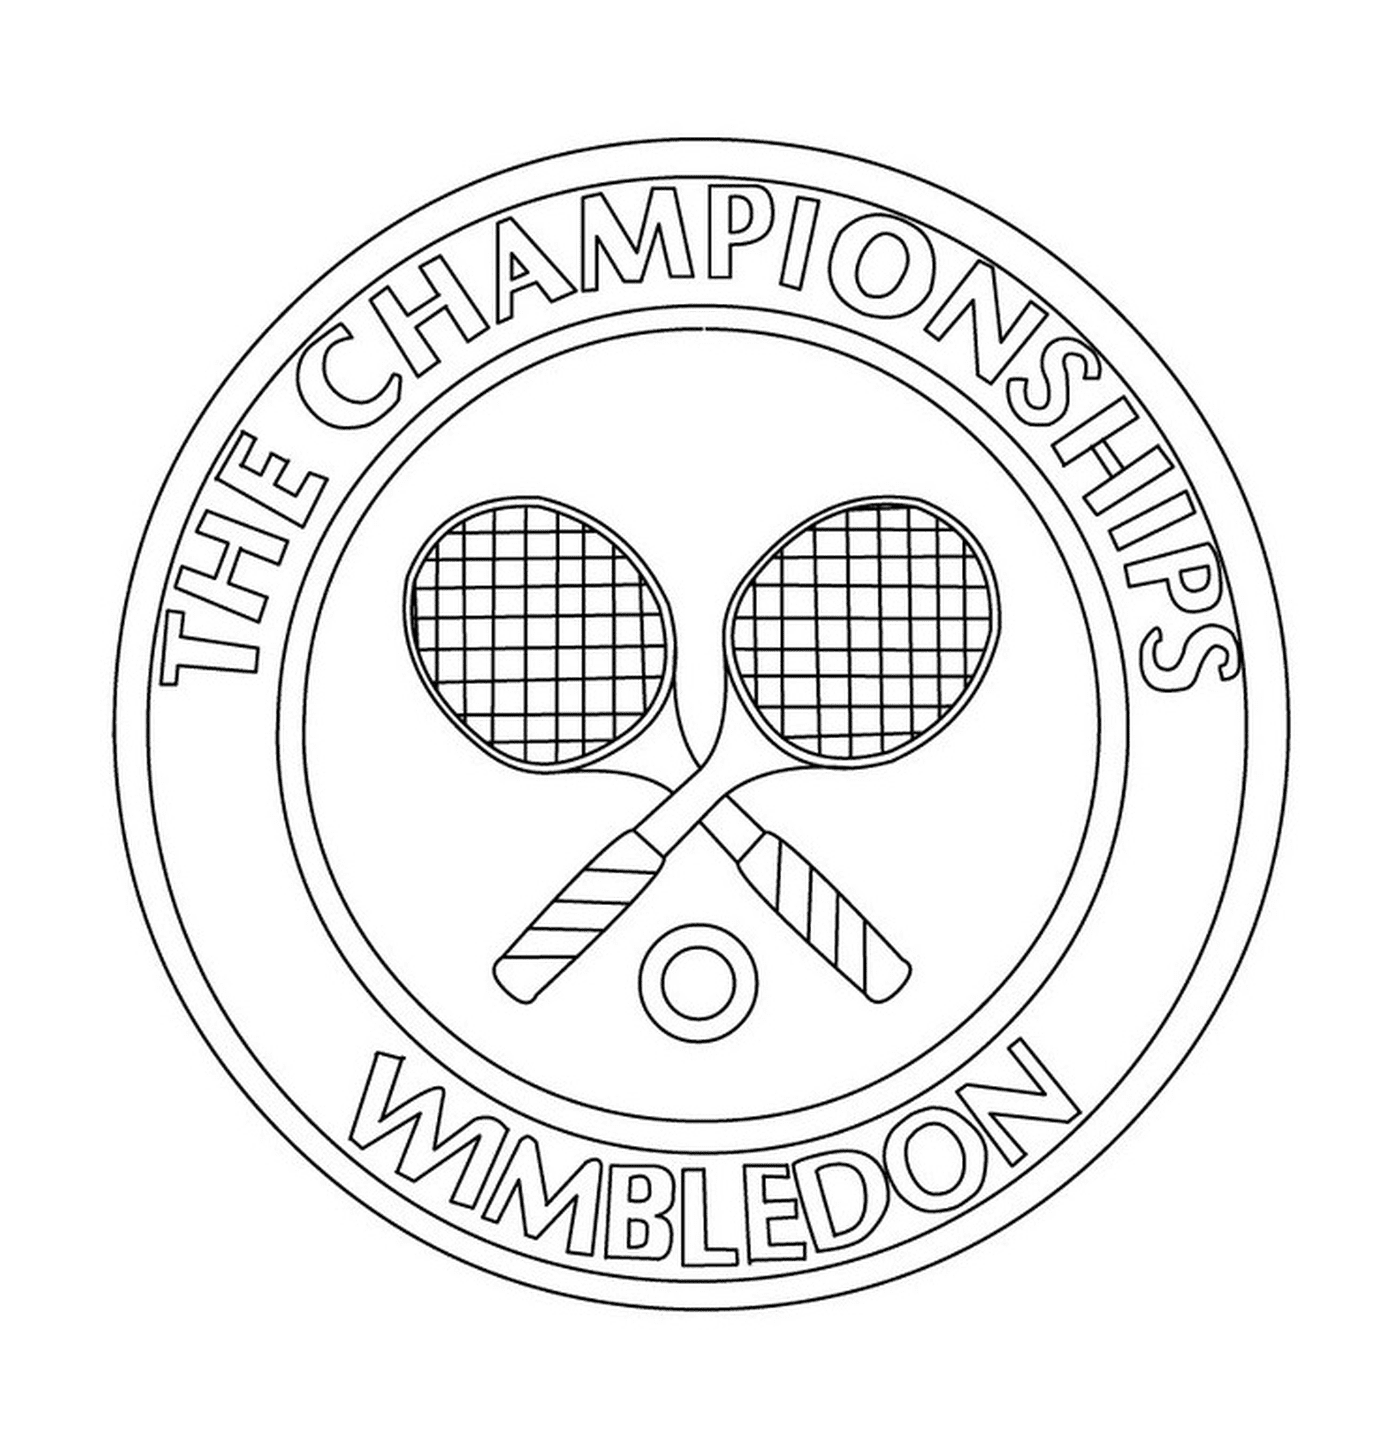  tennis logo The Championships Wimbledon 